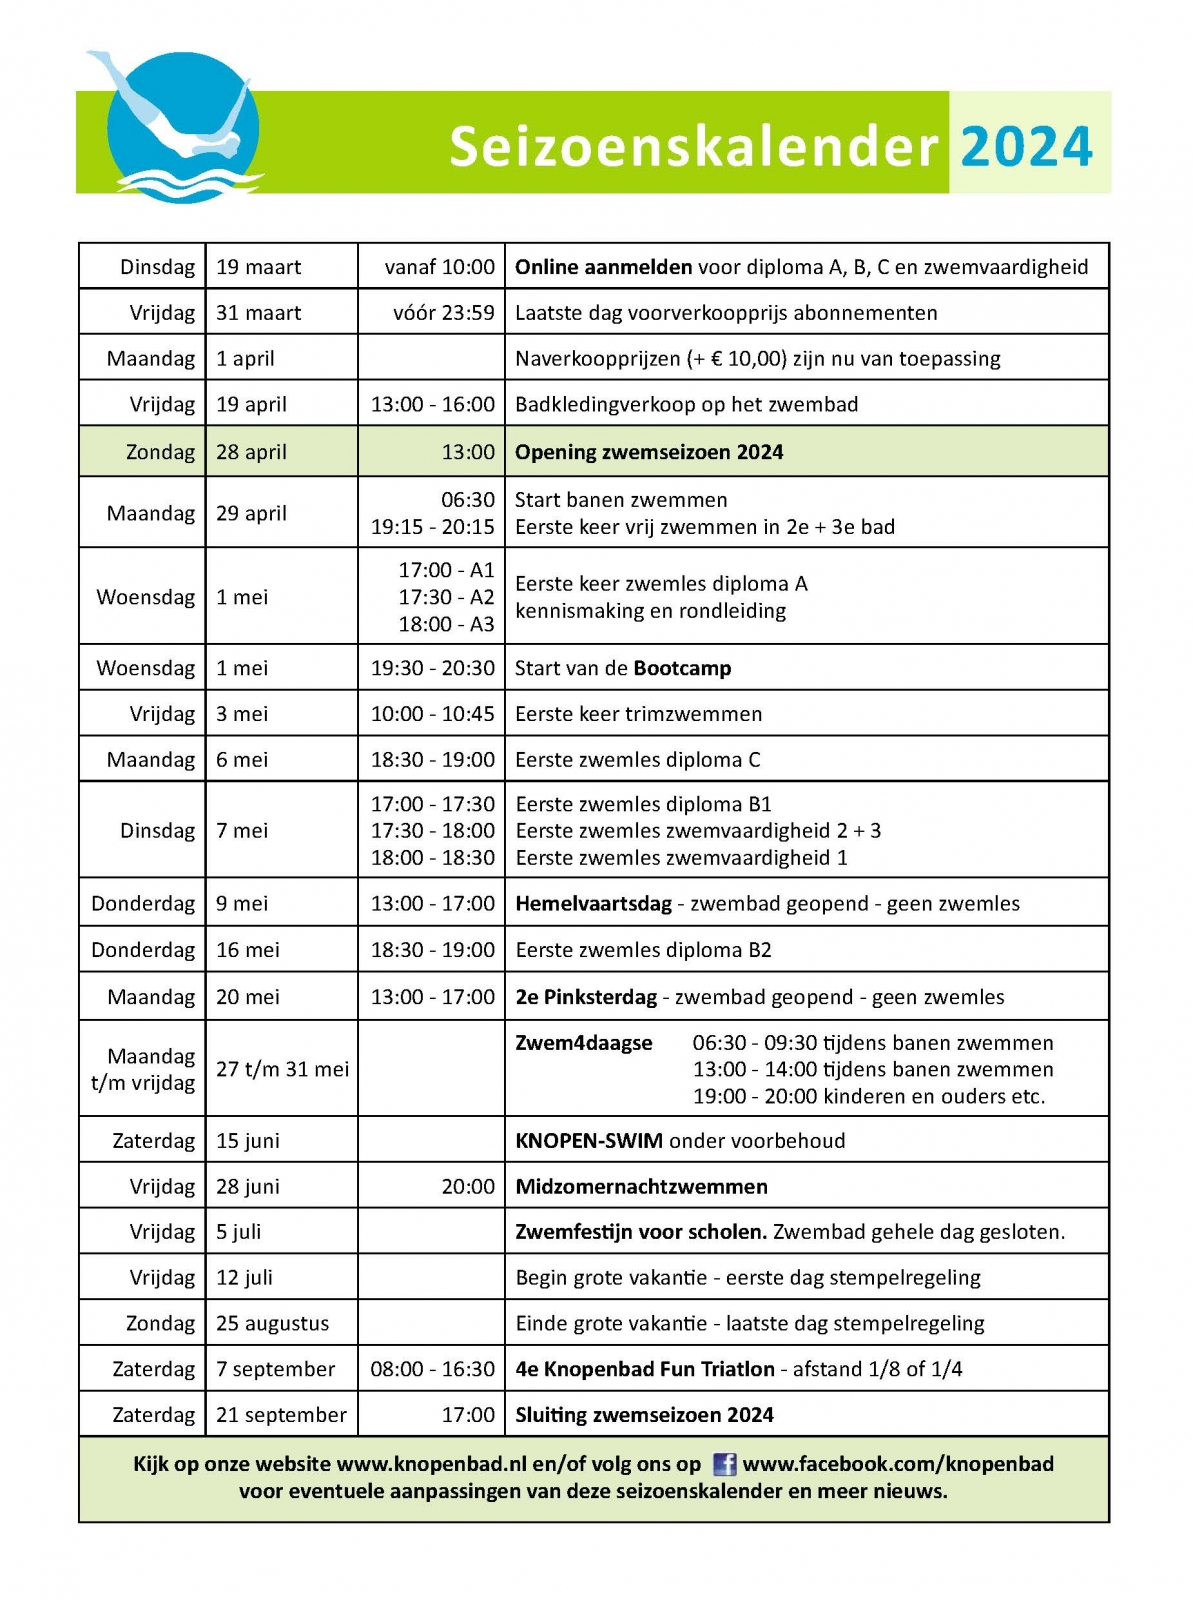 Knopenbad 2024 (activiteitenkalender).jpg